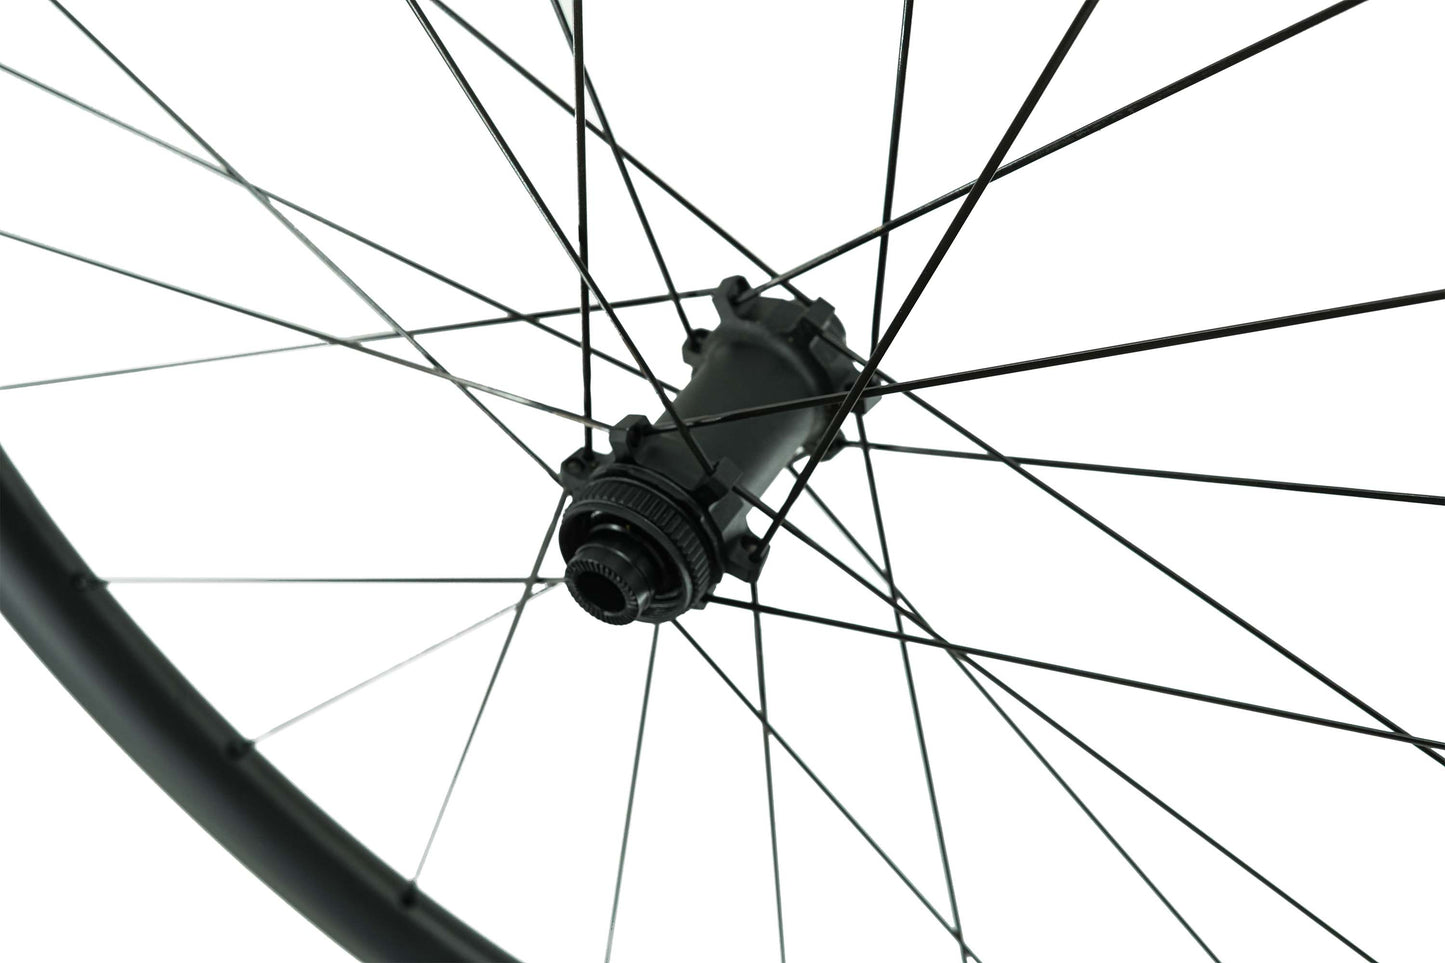 WRC-01 Carbon disc brake wheels (35mm)